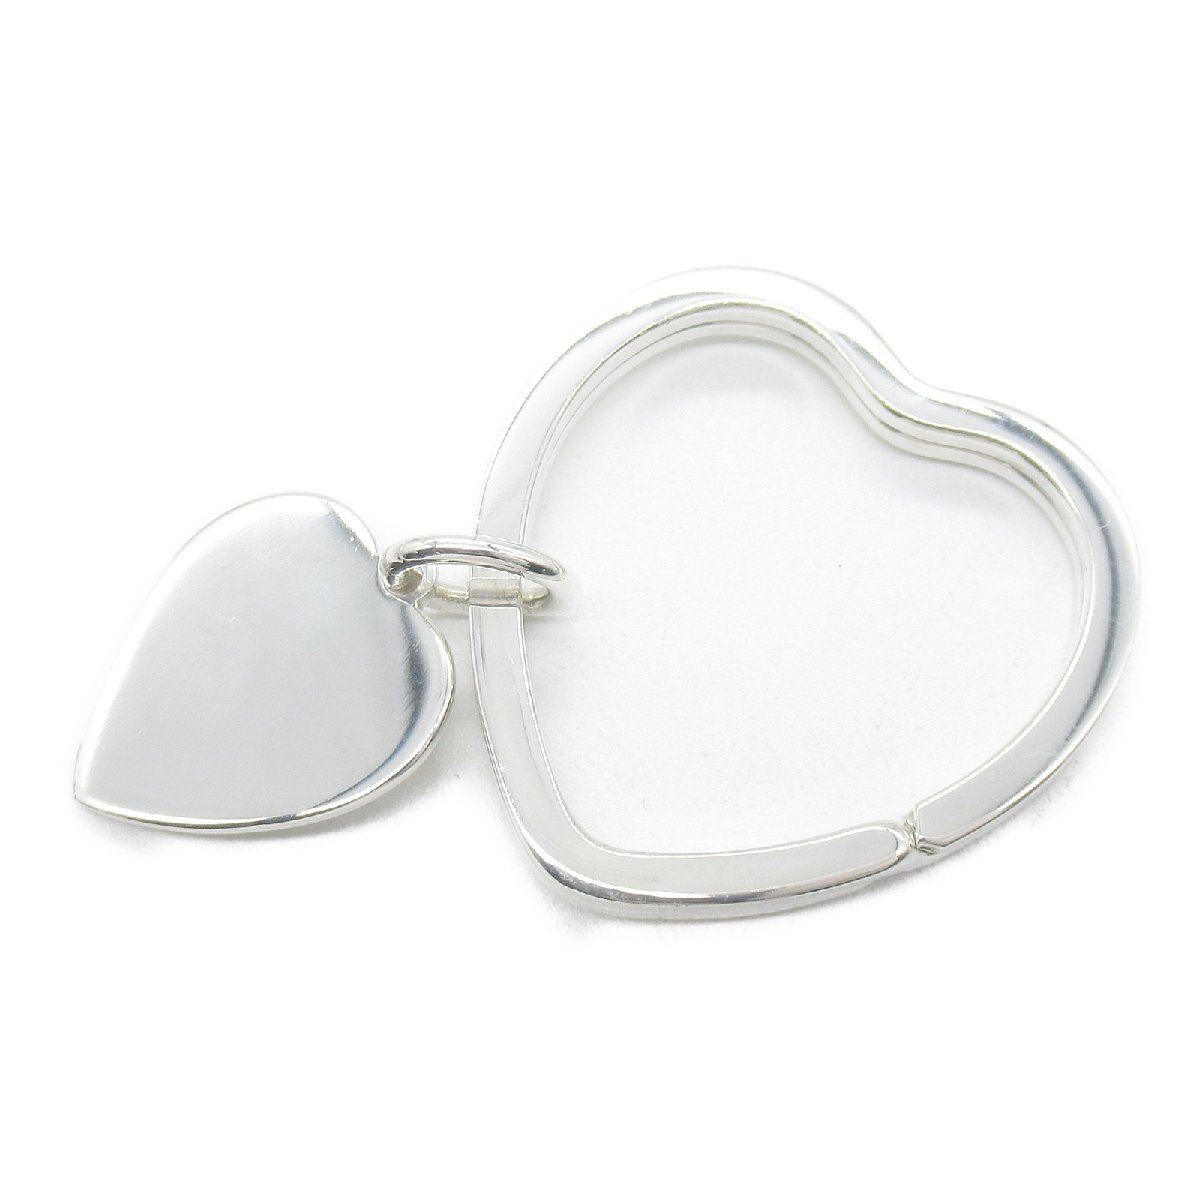  Tiffany Heart key ring brand off TIFFANY&CO silver 925 key ring 925 used lady's 